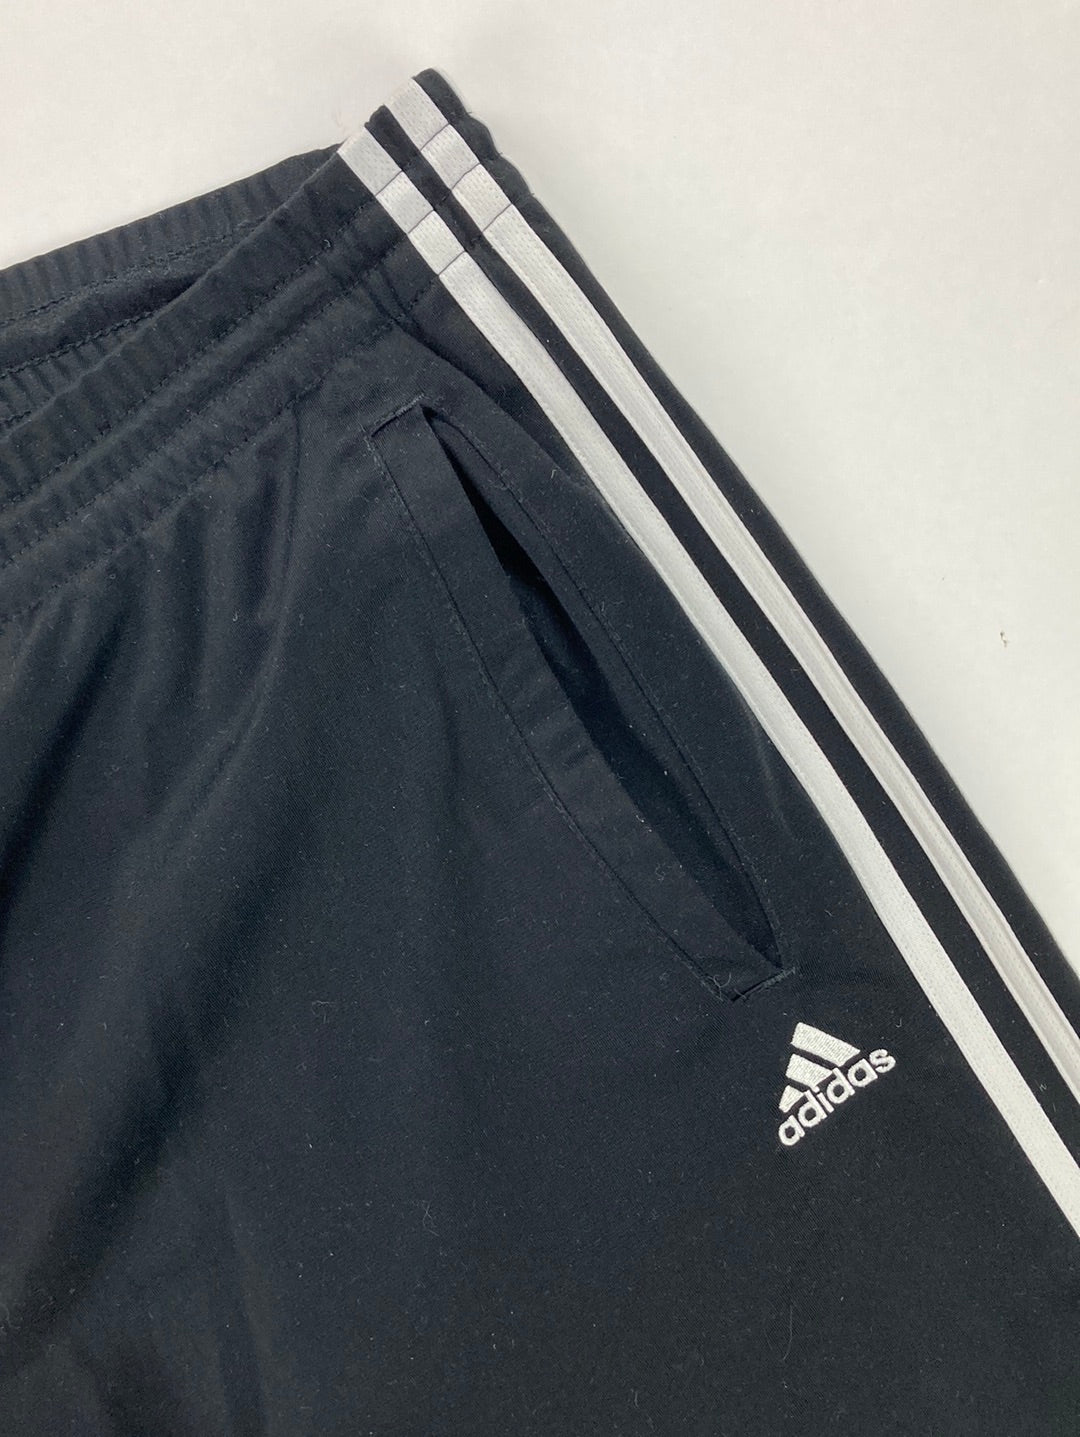 Adidas Track Pants (XXL)